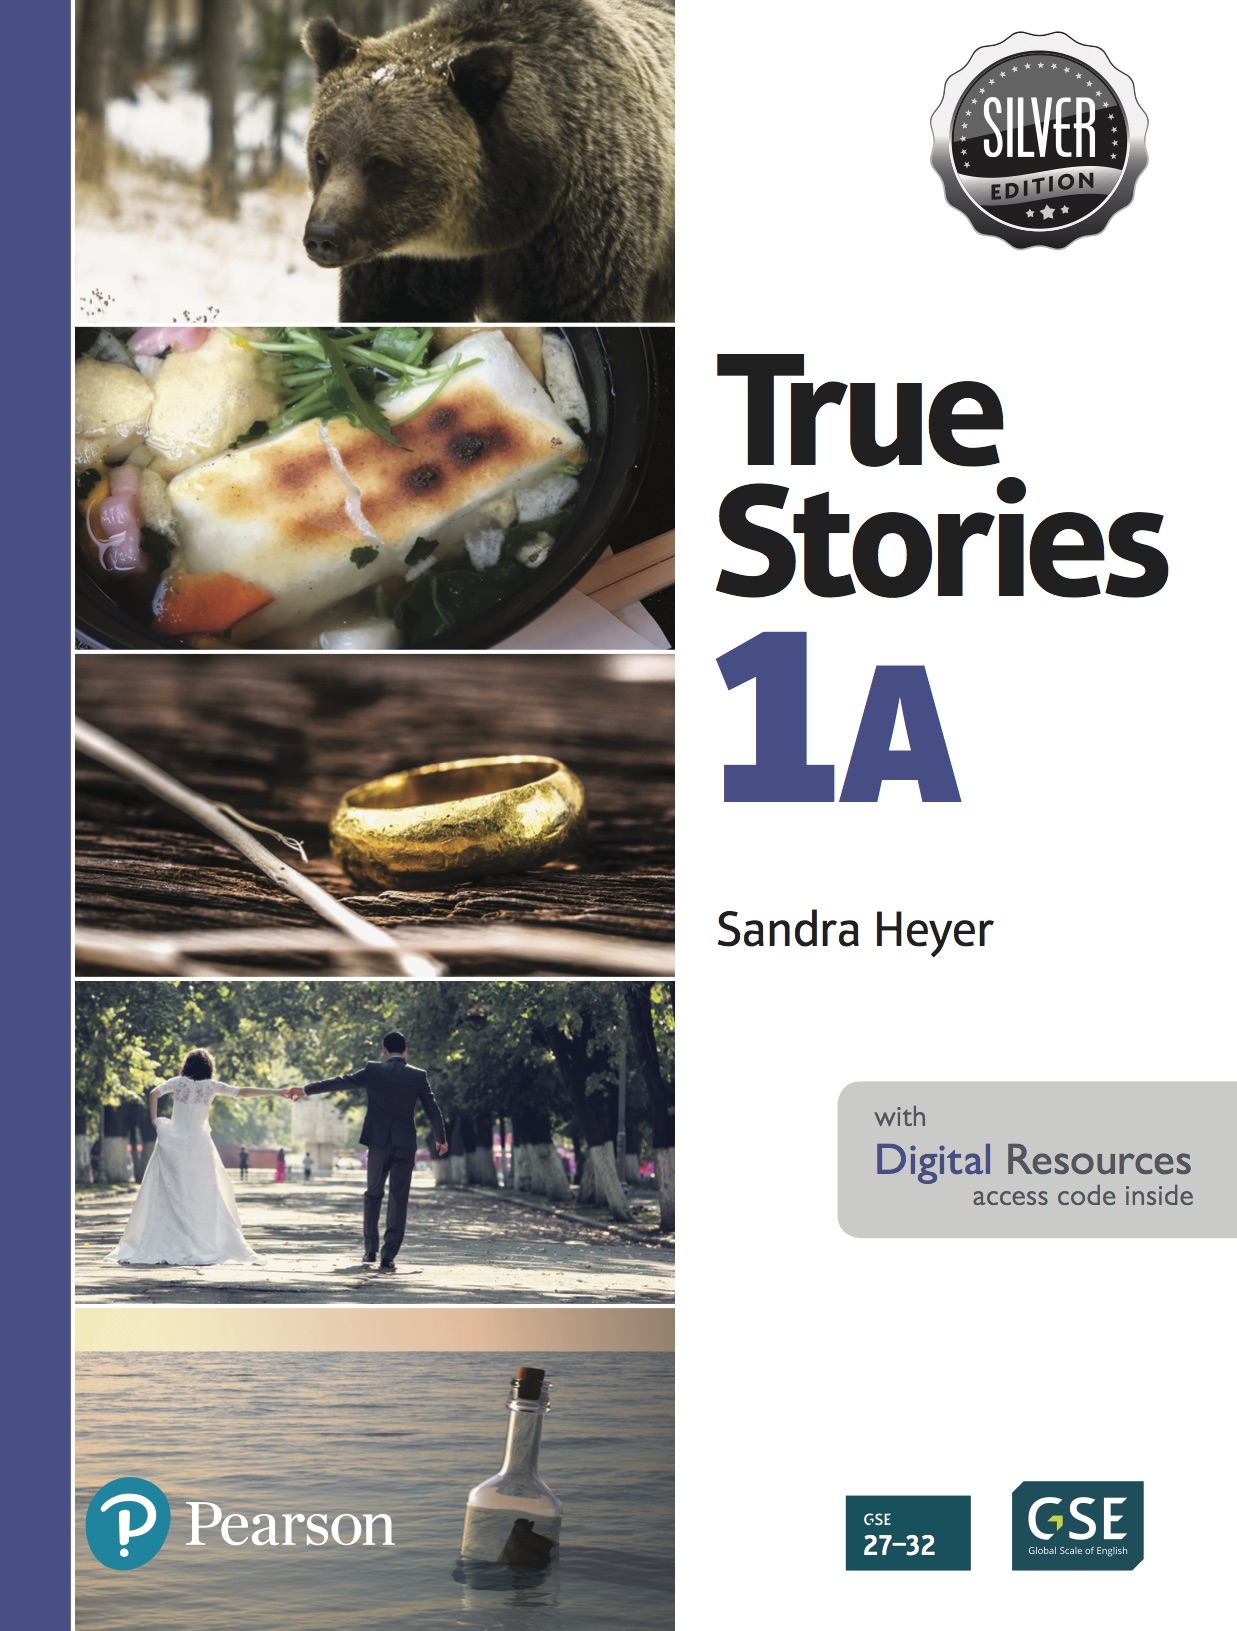 True easy. True stories by Sandra Heyer. Easy true stories Sandra Heyer. Very easy true stories. True stories brand.